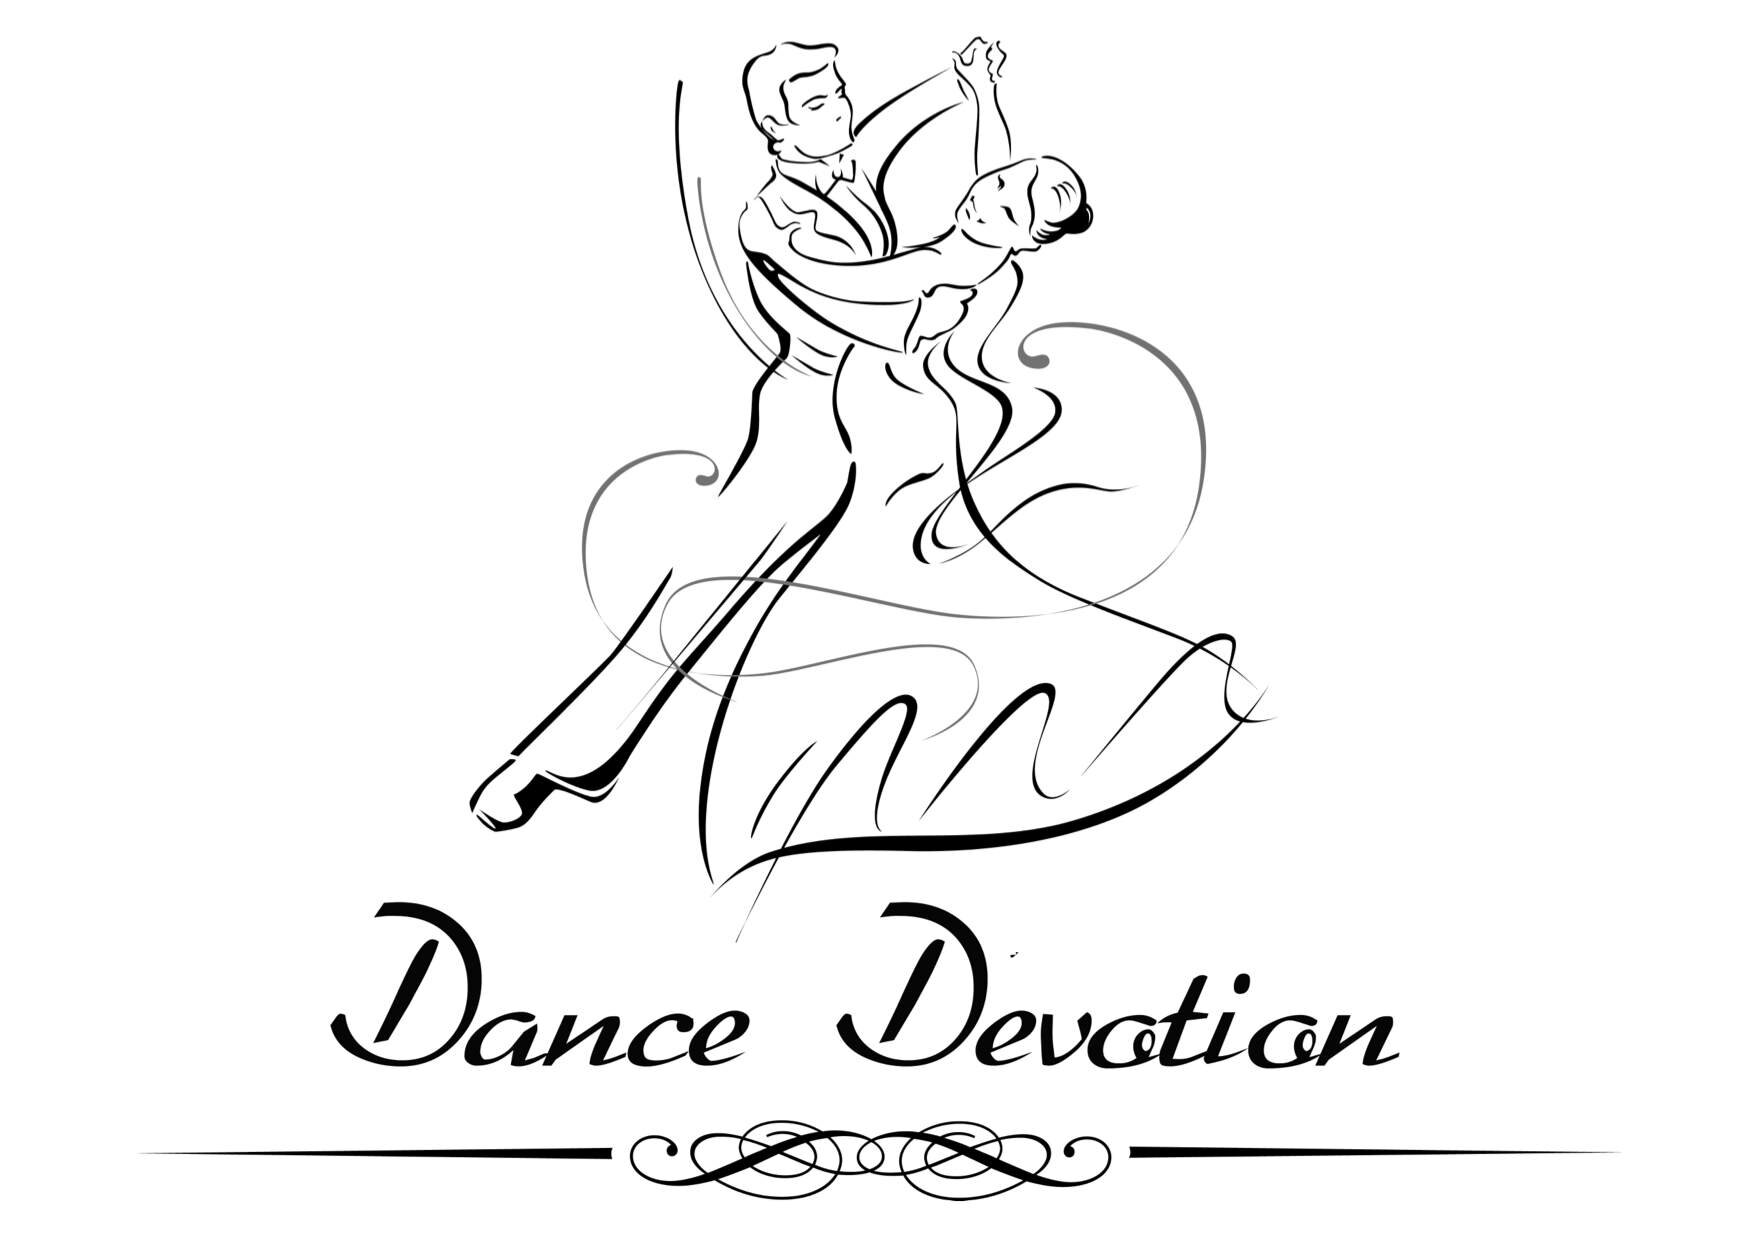  Dance Devotion